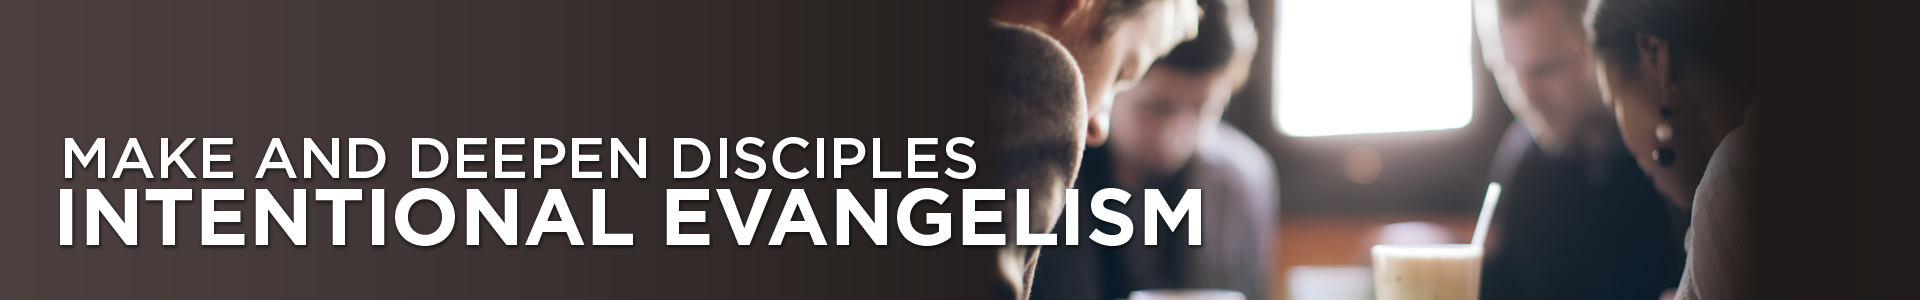 evangelism-banner-secondary